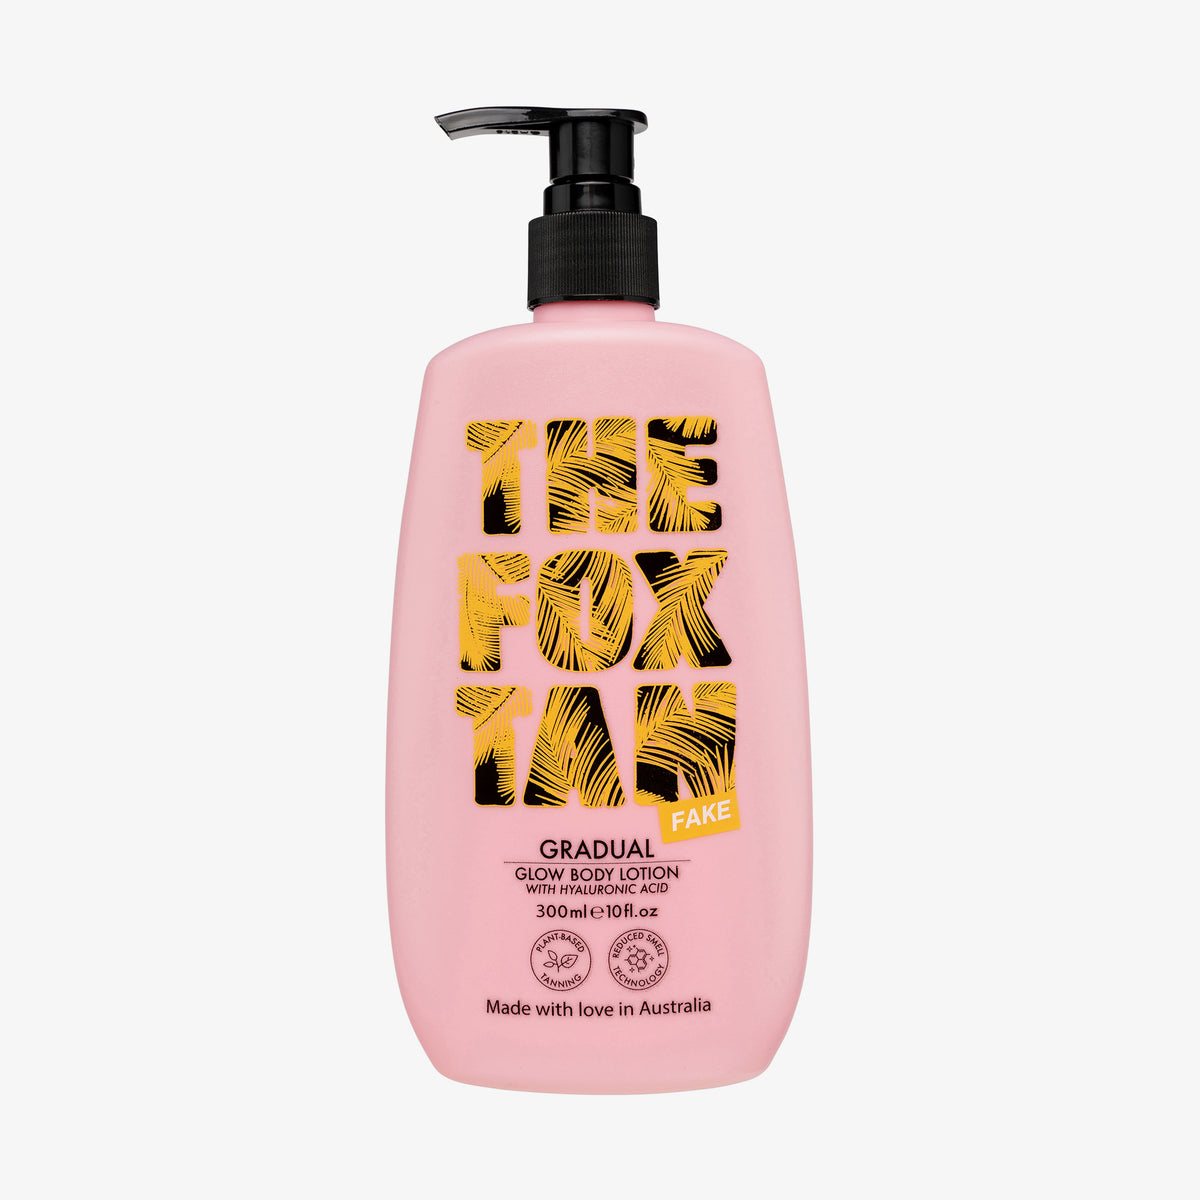 The Fox Tan | Gradual Glow Body Lotion